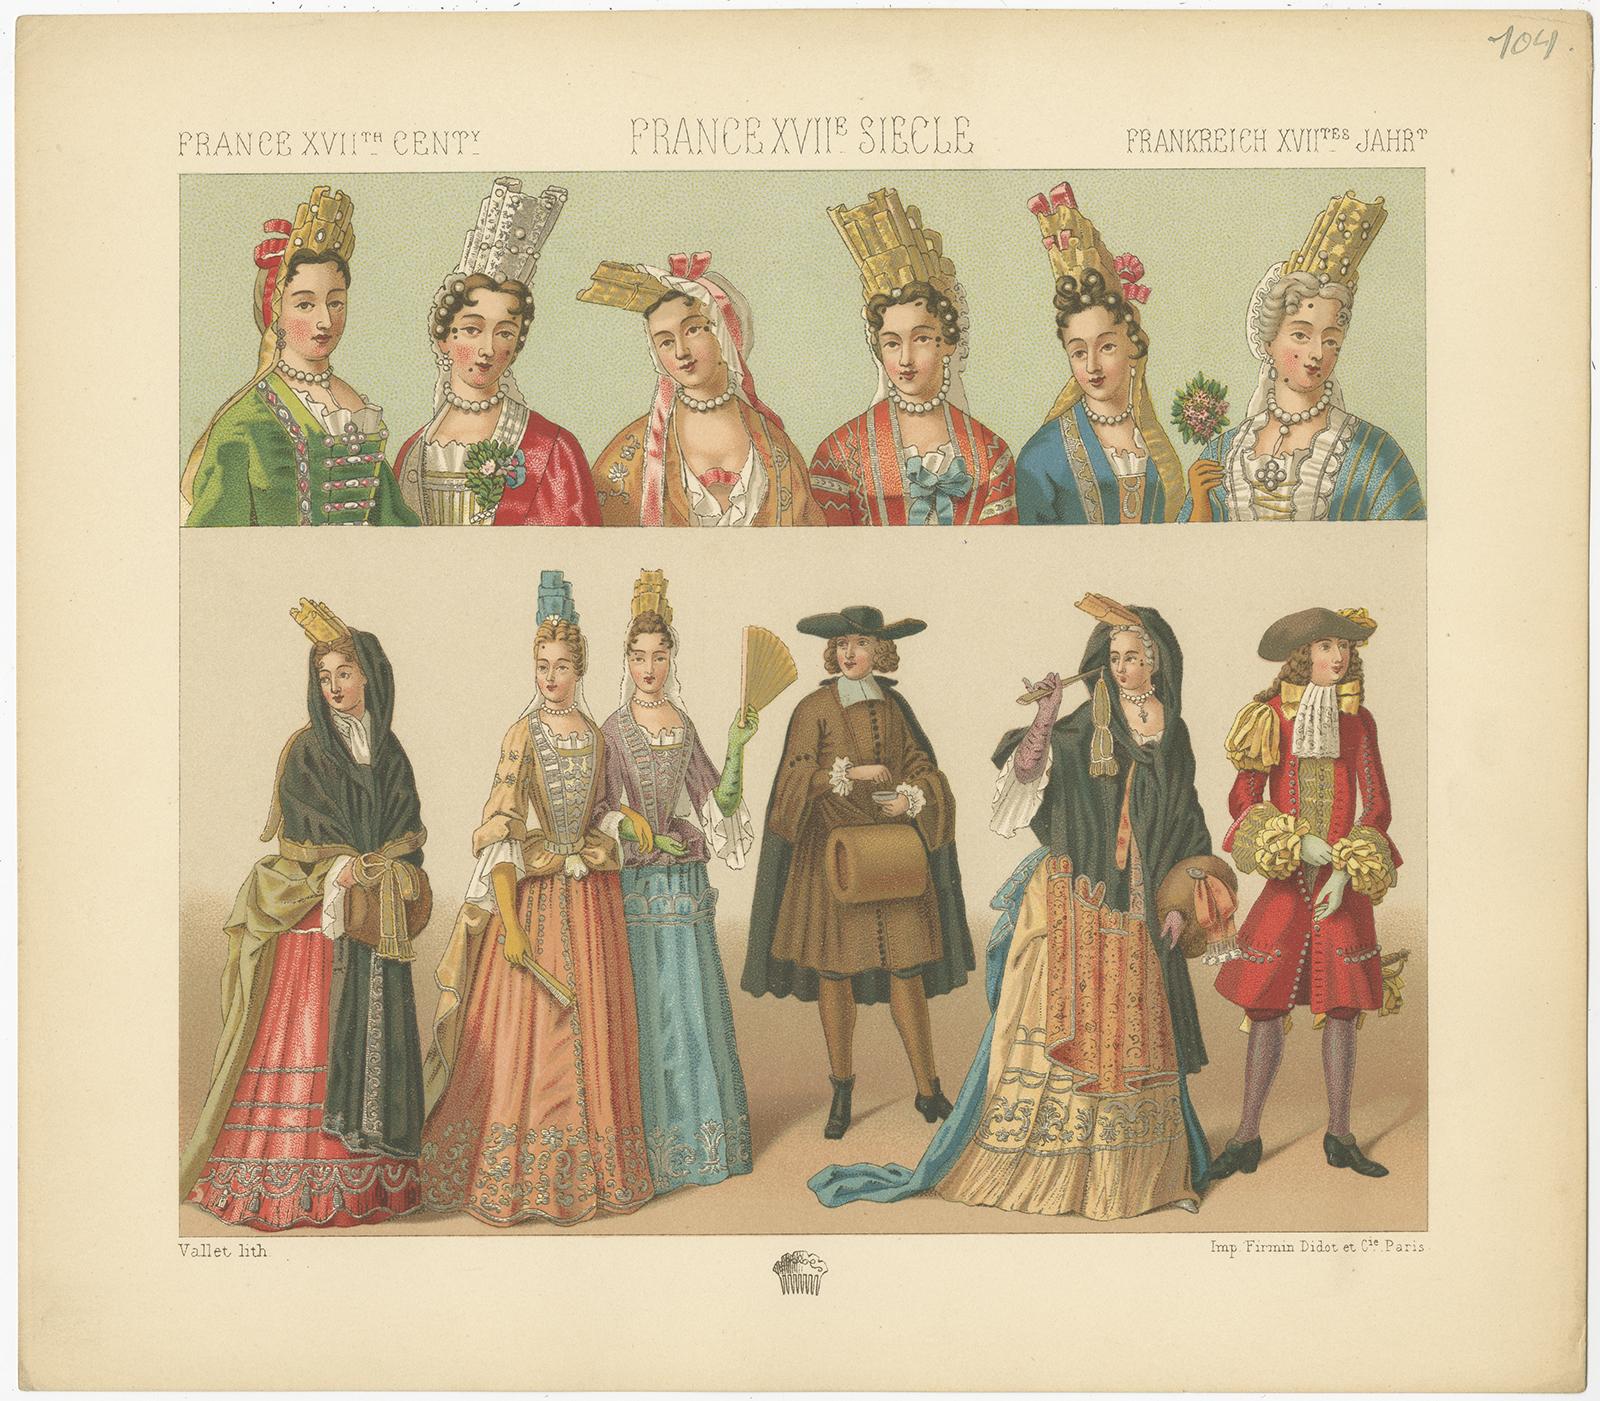 17th century men's fashion